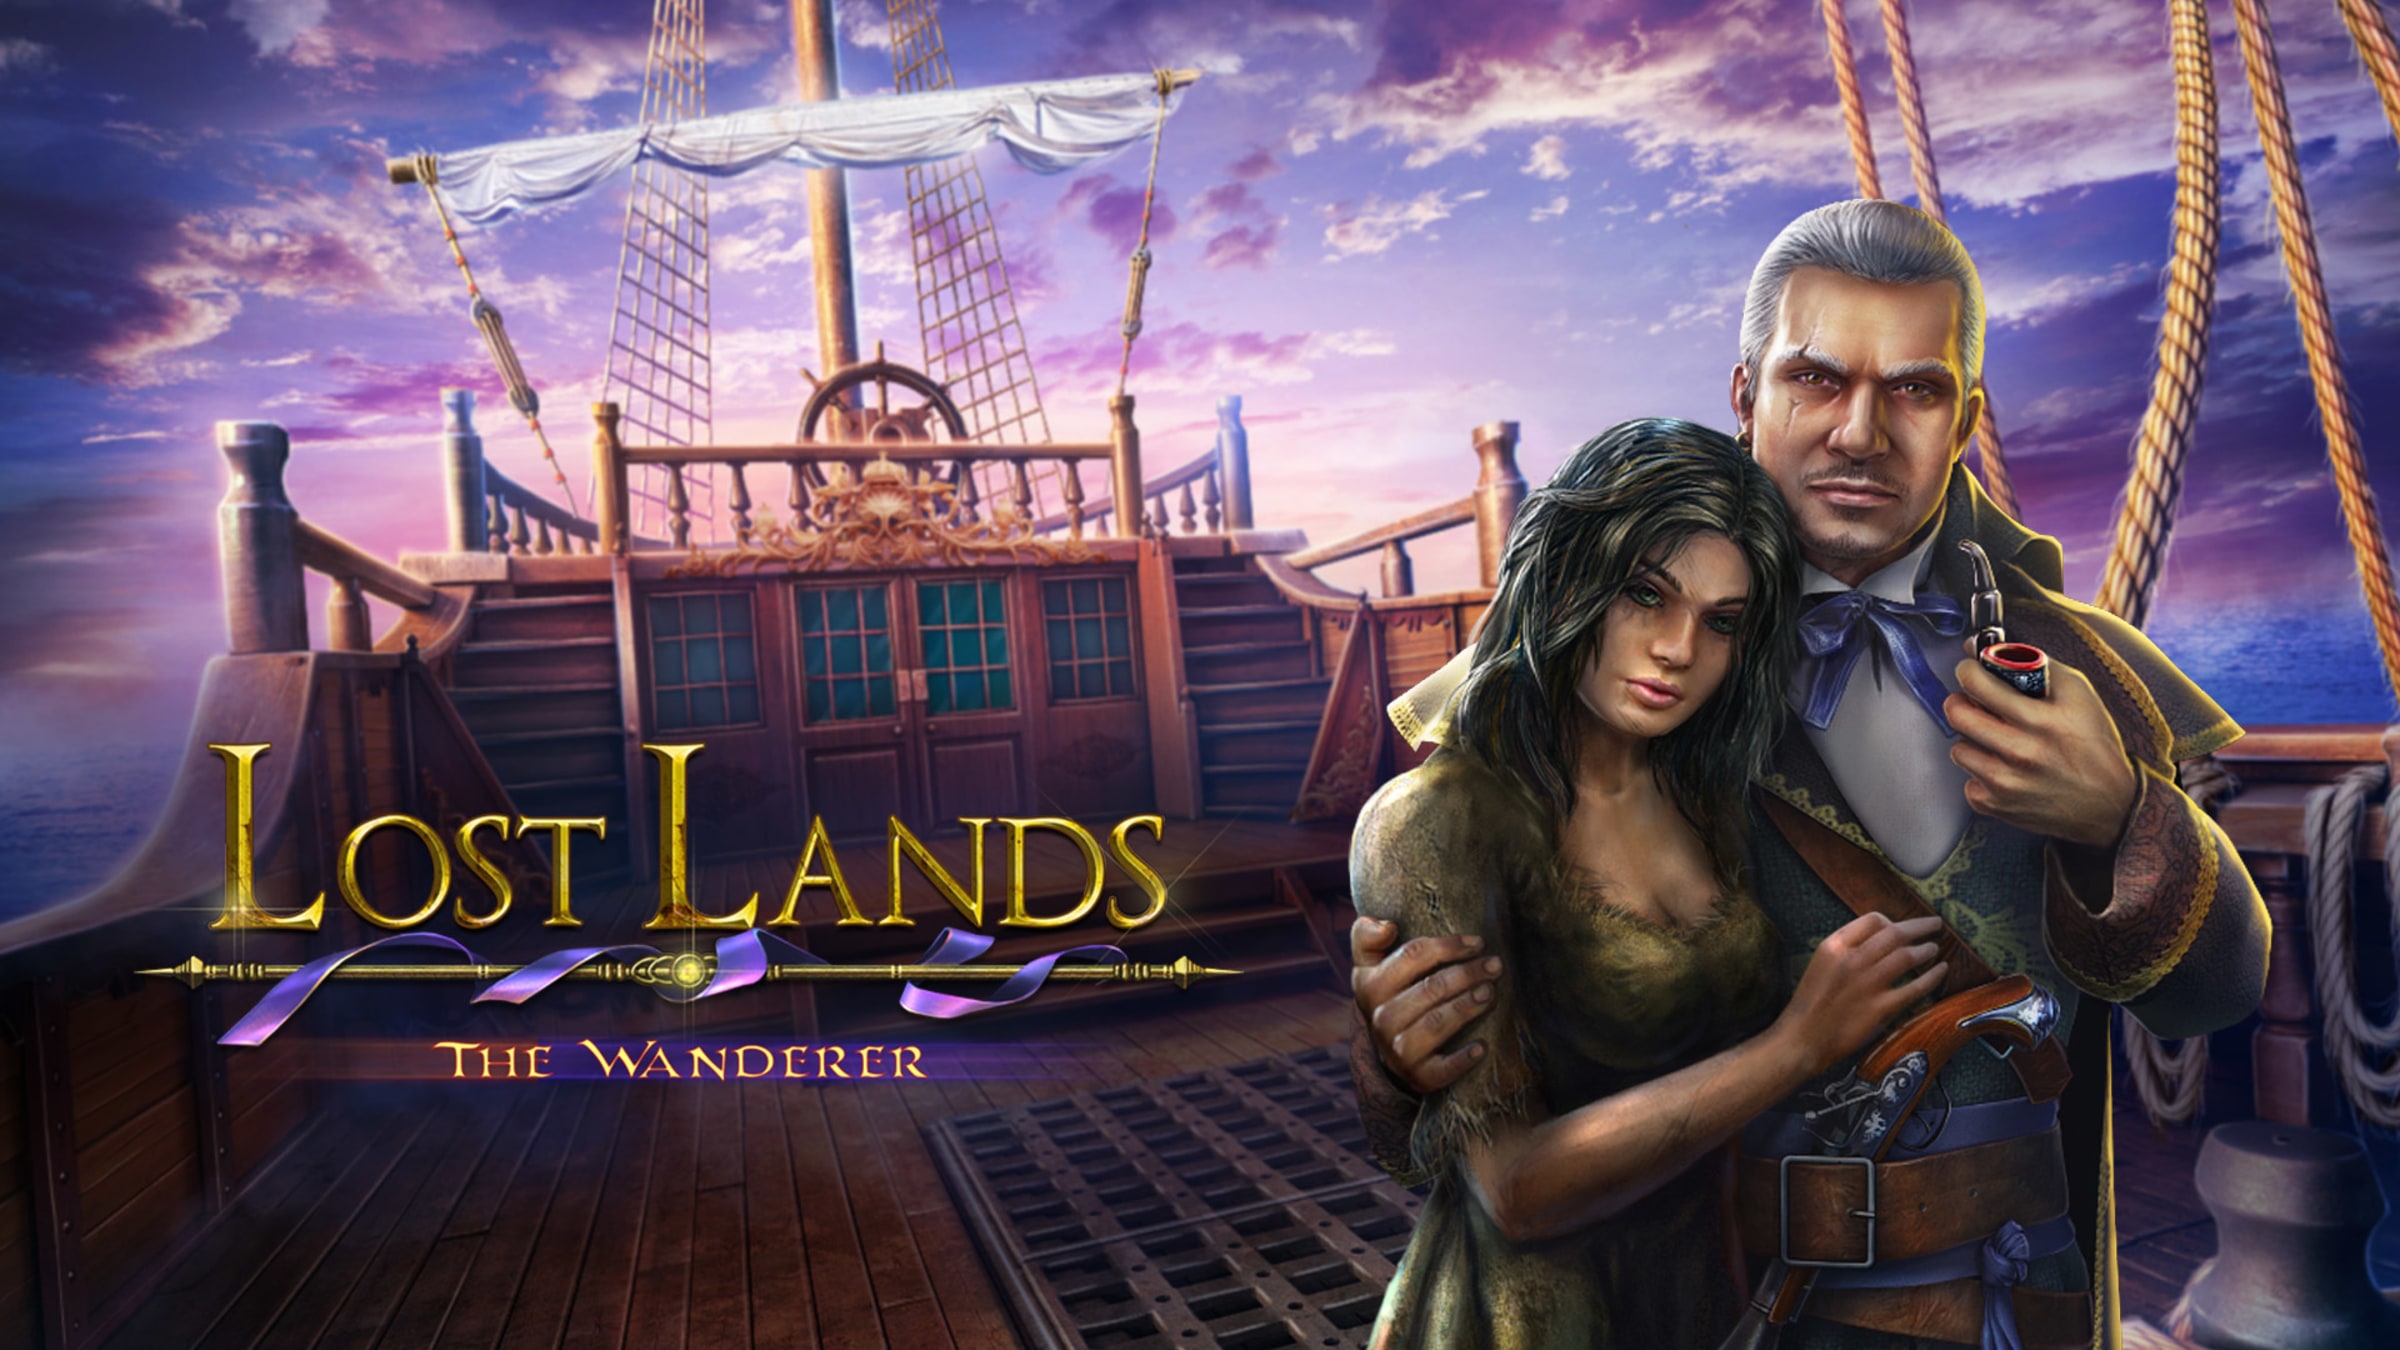 Lost Lands: Redemption  Aplicações de download da Nintendo Switch